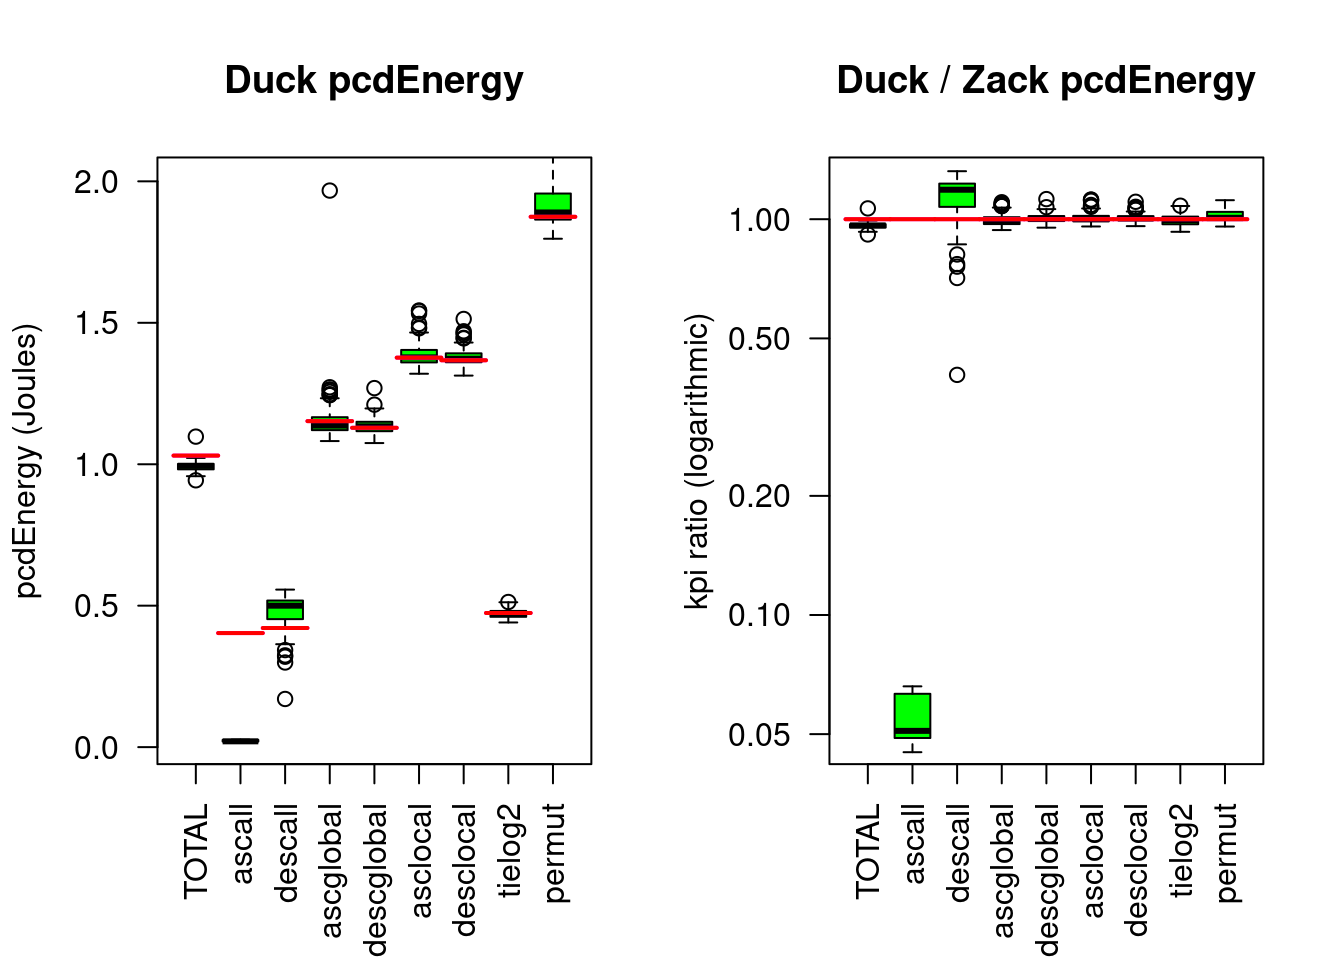 Ducksort compared to Zacksort